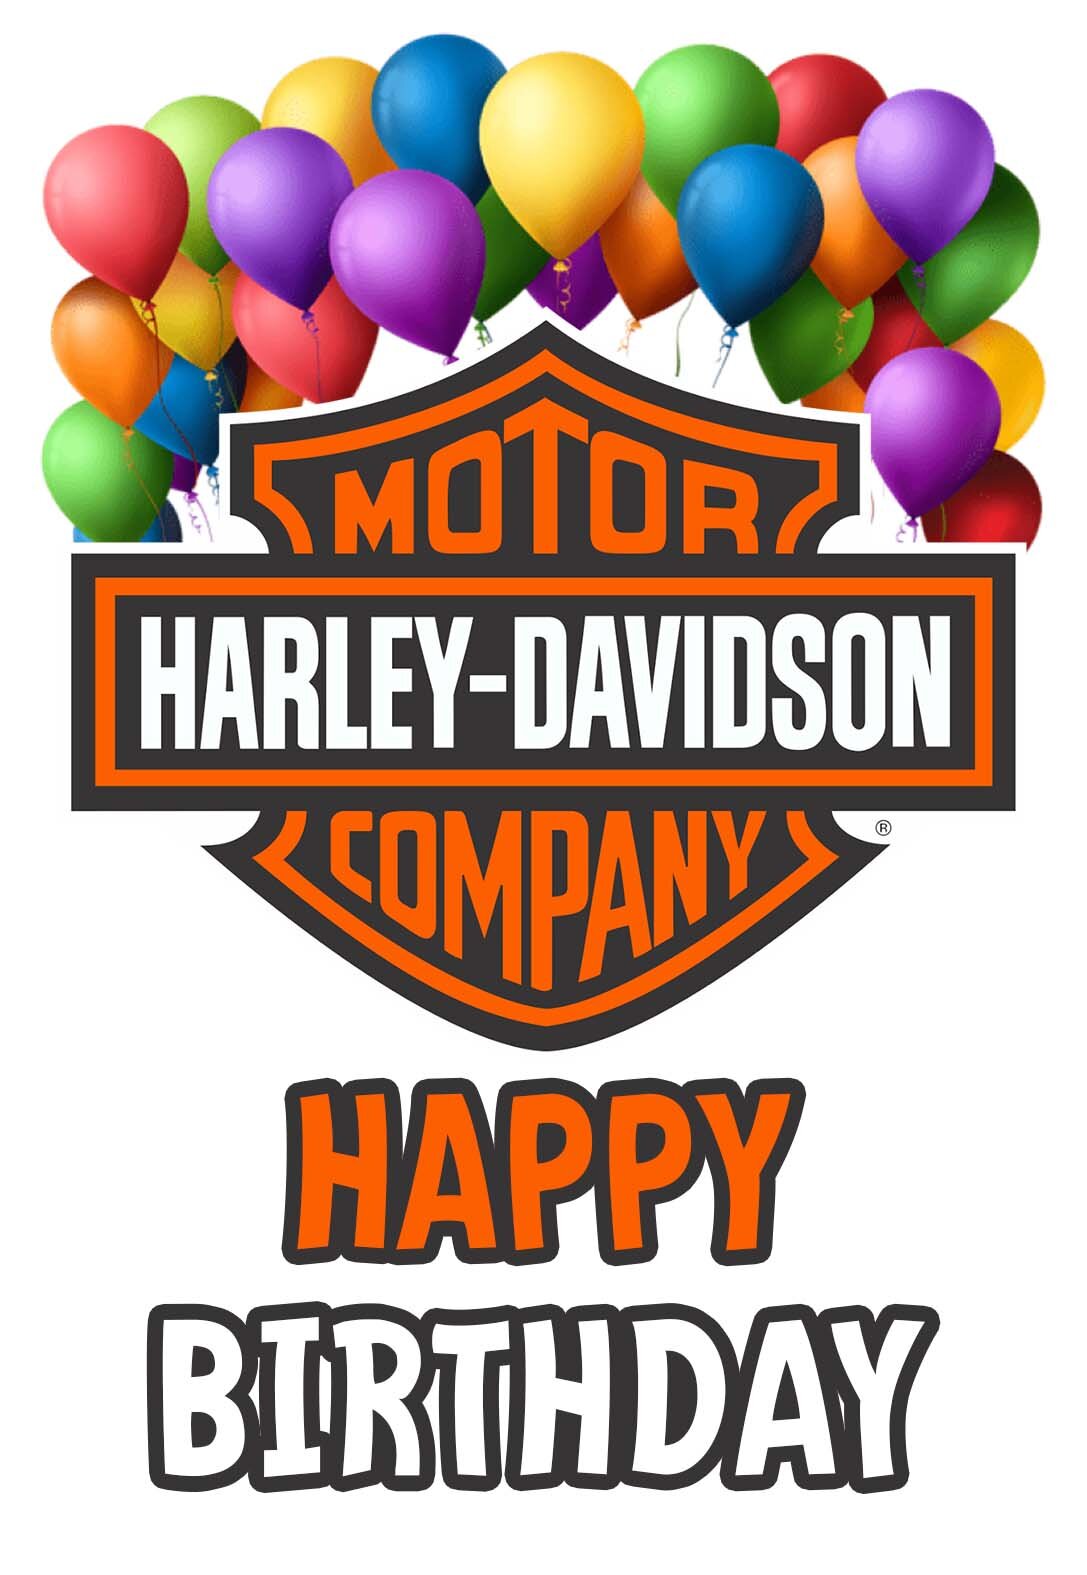 6 Harley Davidson Printable Birthday Cards (free) — PRINTBIRTHDAY.CARDS